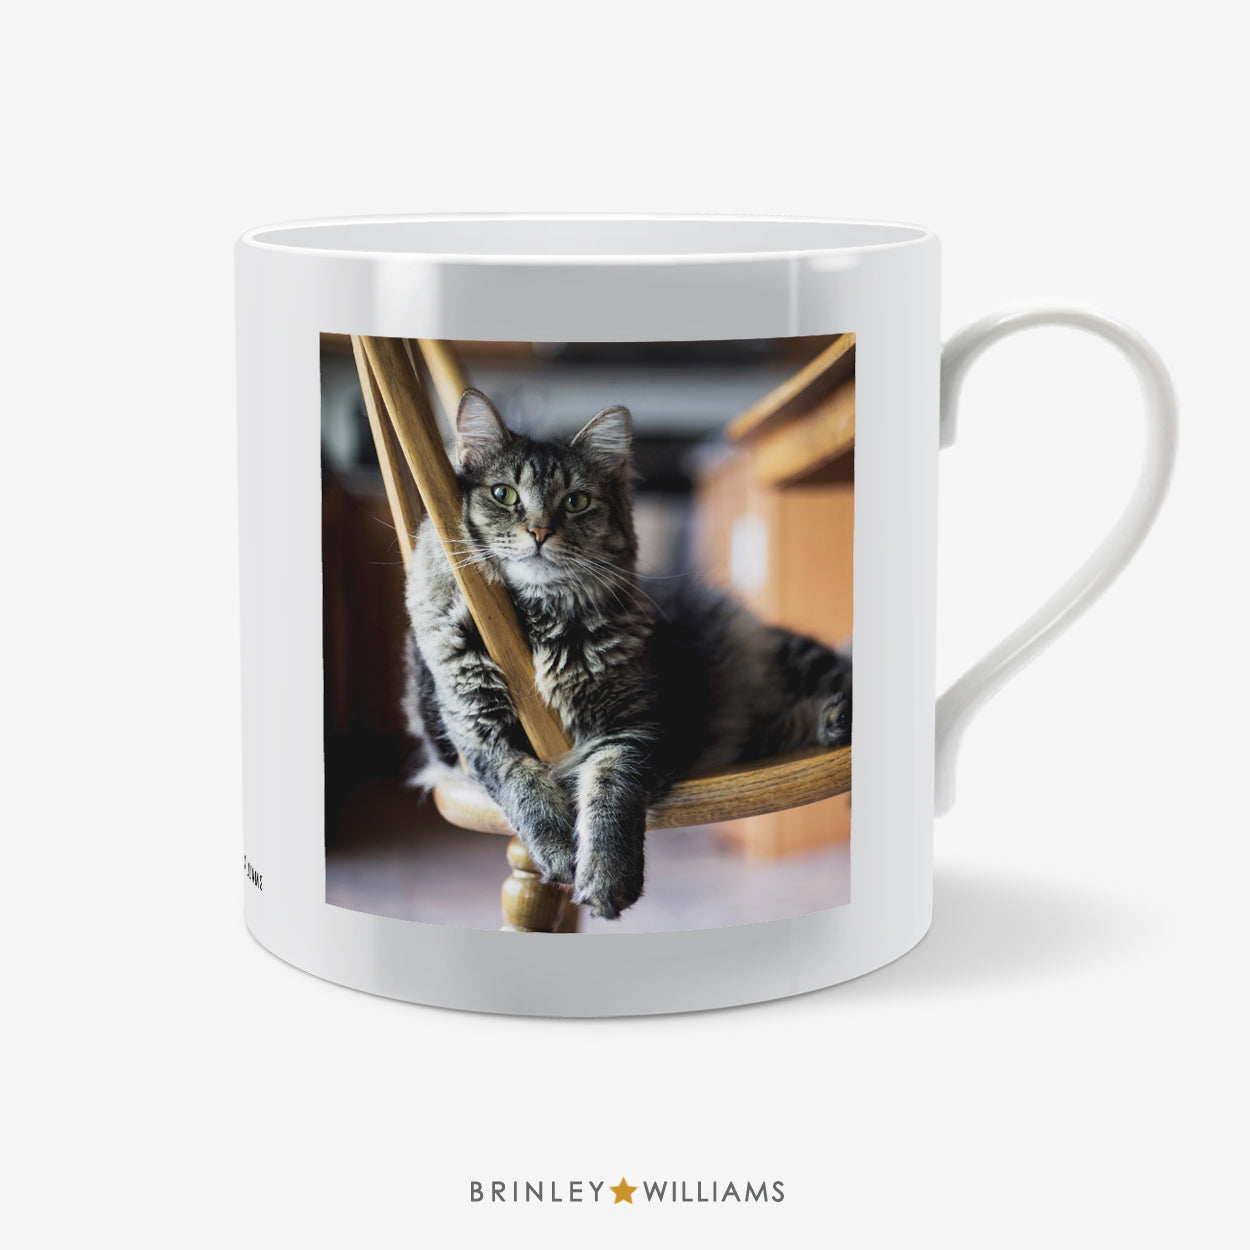 Photo and Text Personalised Mug - Photo side